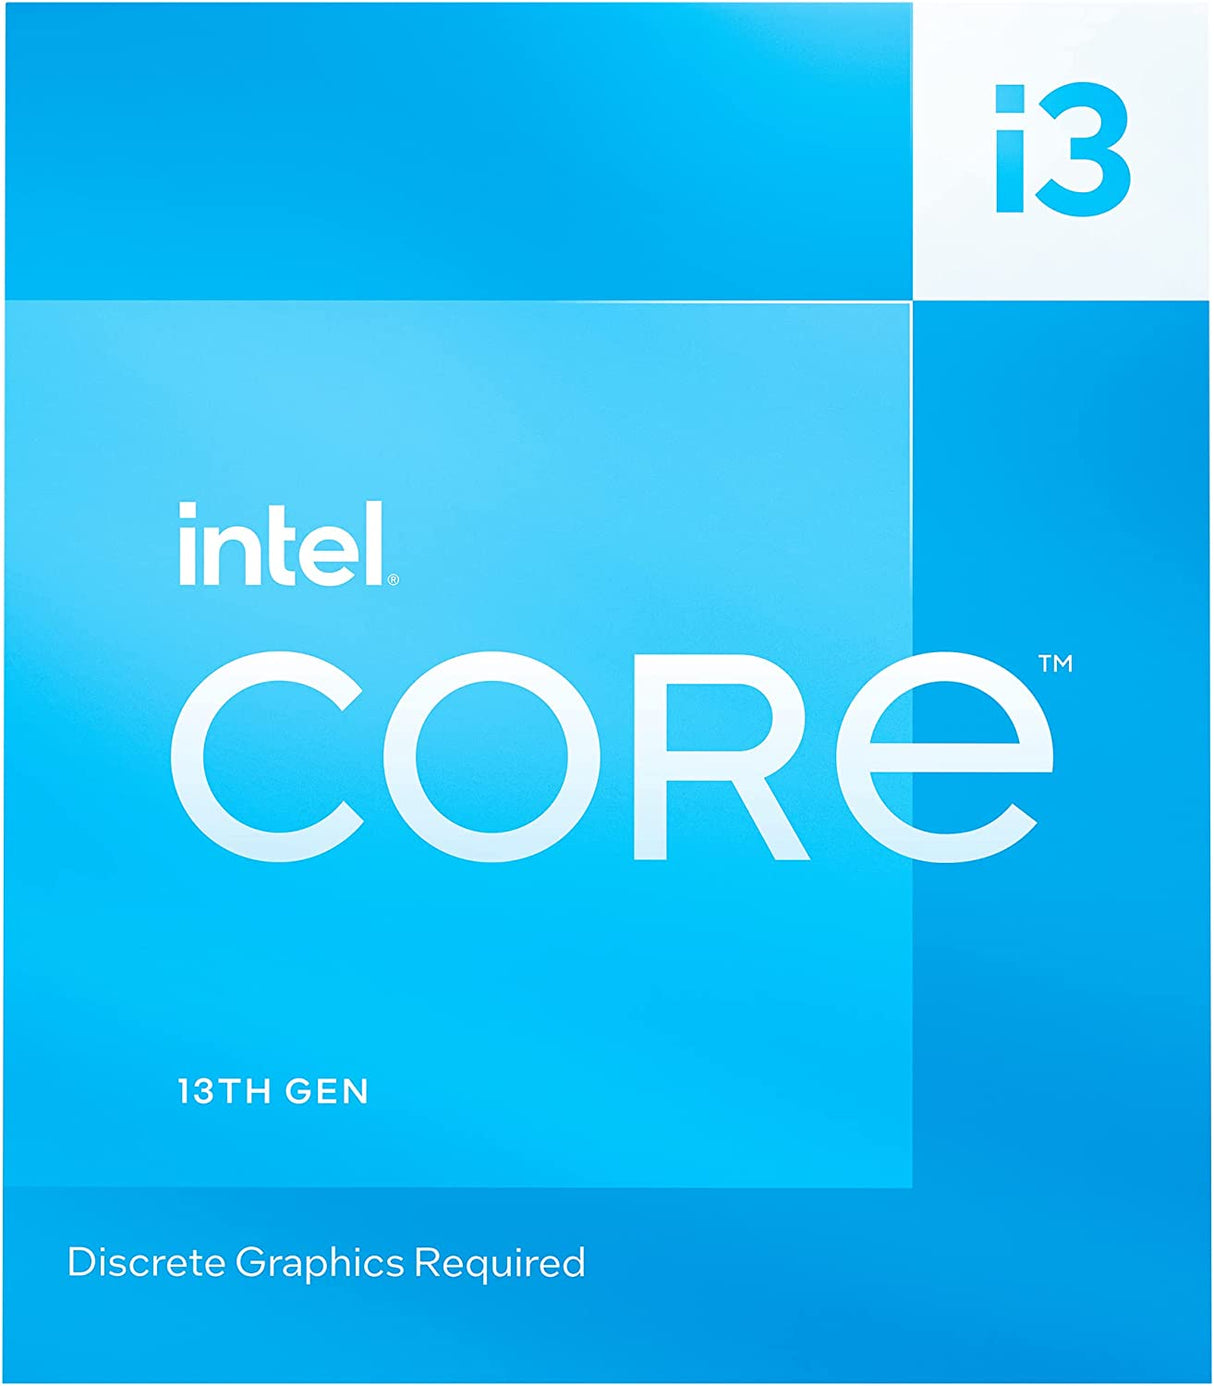 Intel Core i3-13100F Desktop Processor 4 cores (4 P-cores + 0 E-cores) 12MB Cache, up to 4.5 GHz